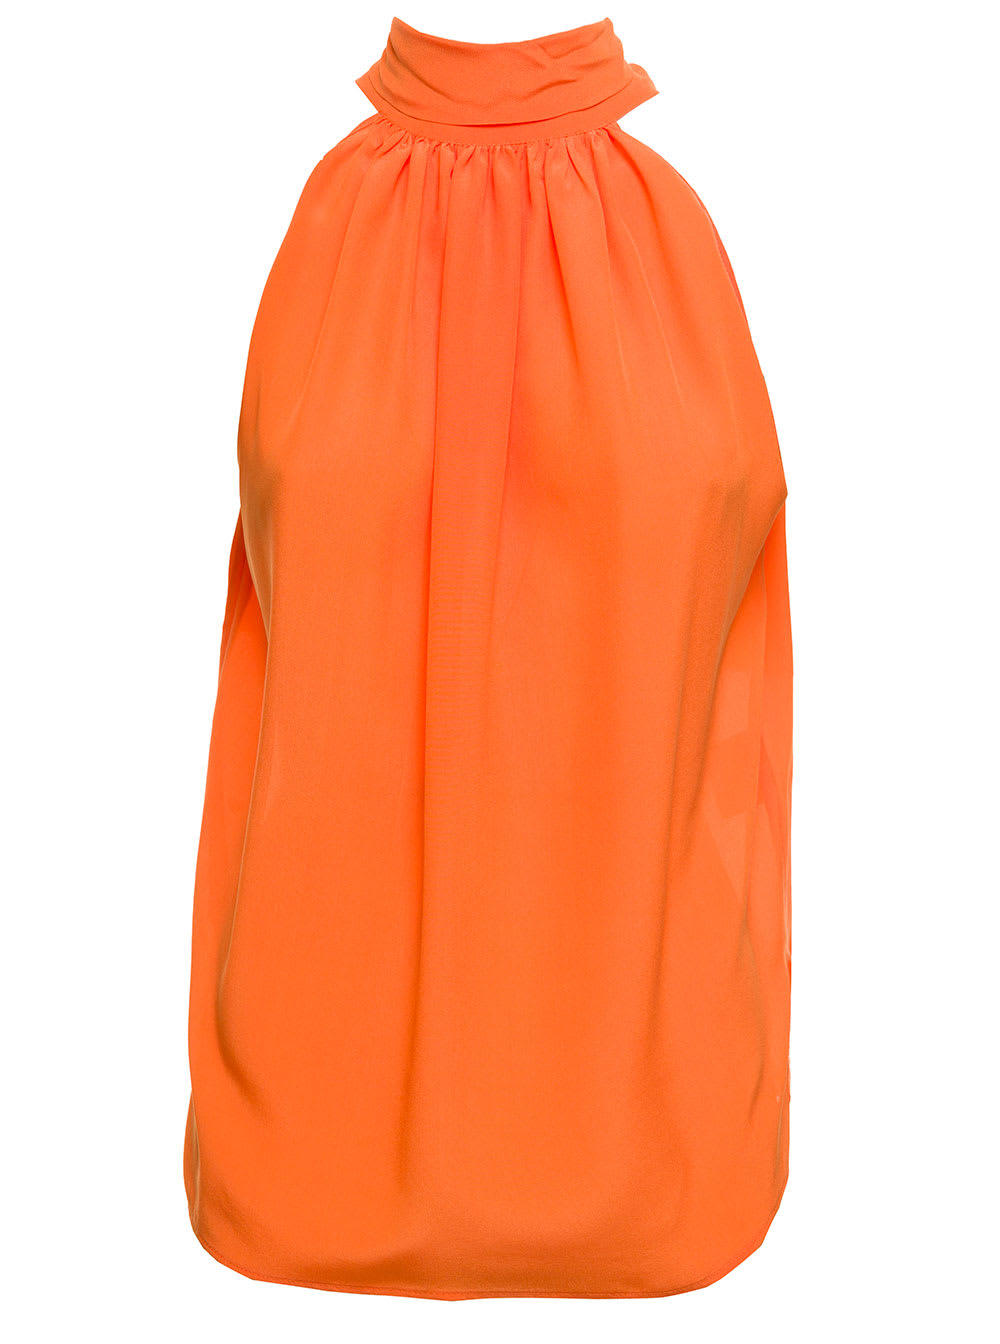 Jejia Womans Orange Silk Top